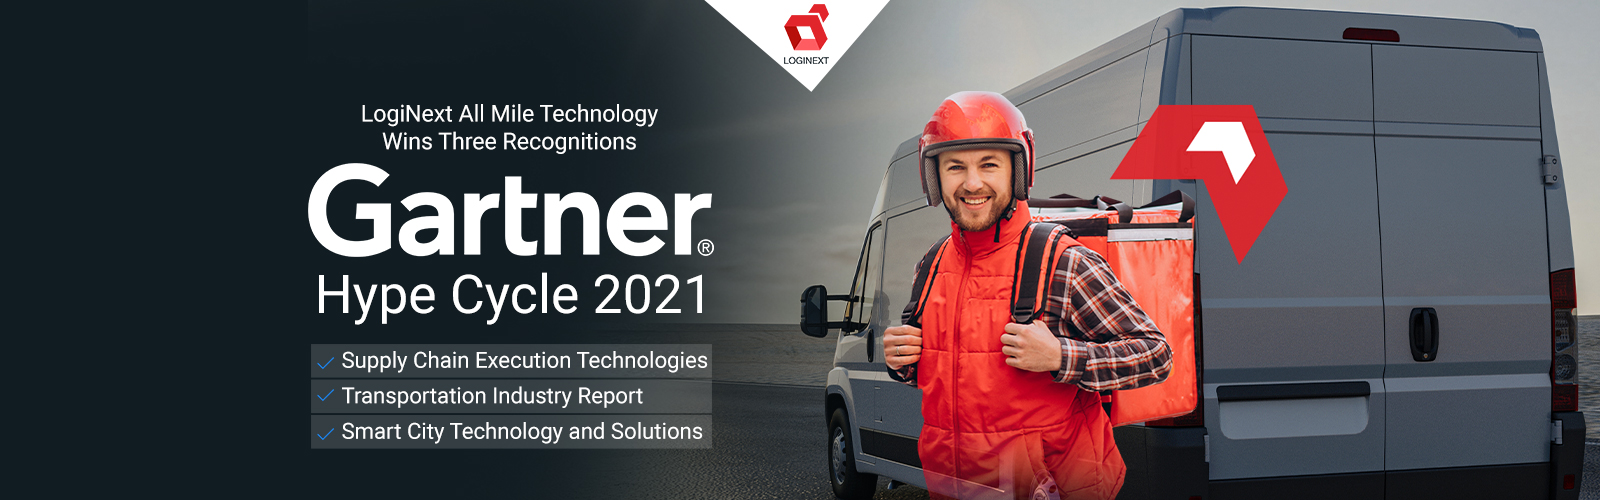 LogiNext Announces Triple Gartner 2021 Recognition for its Last Mile Technology